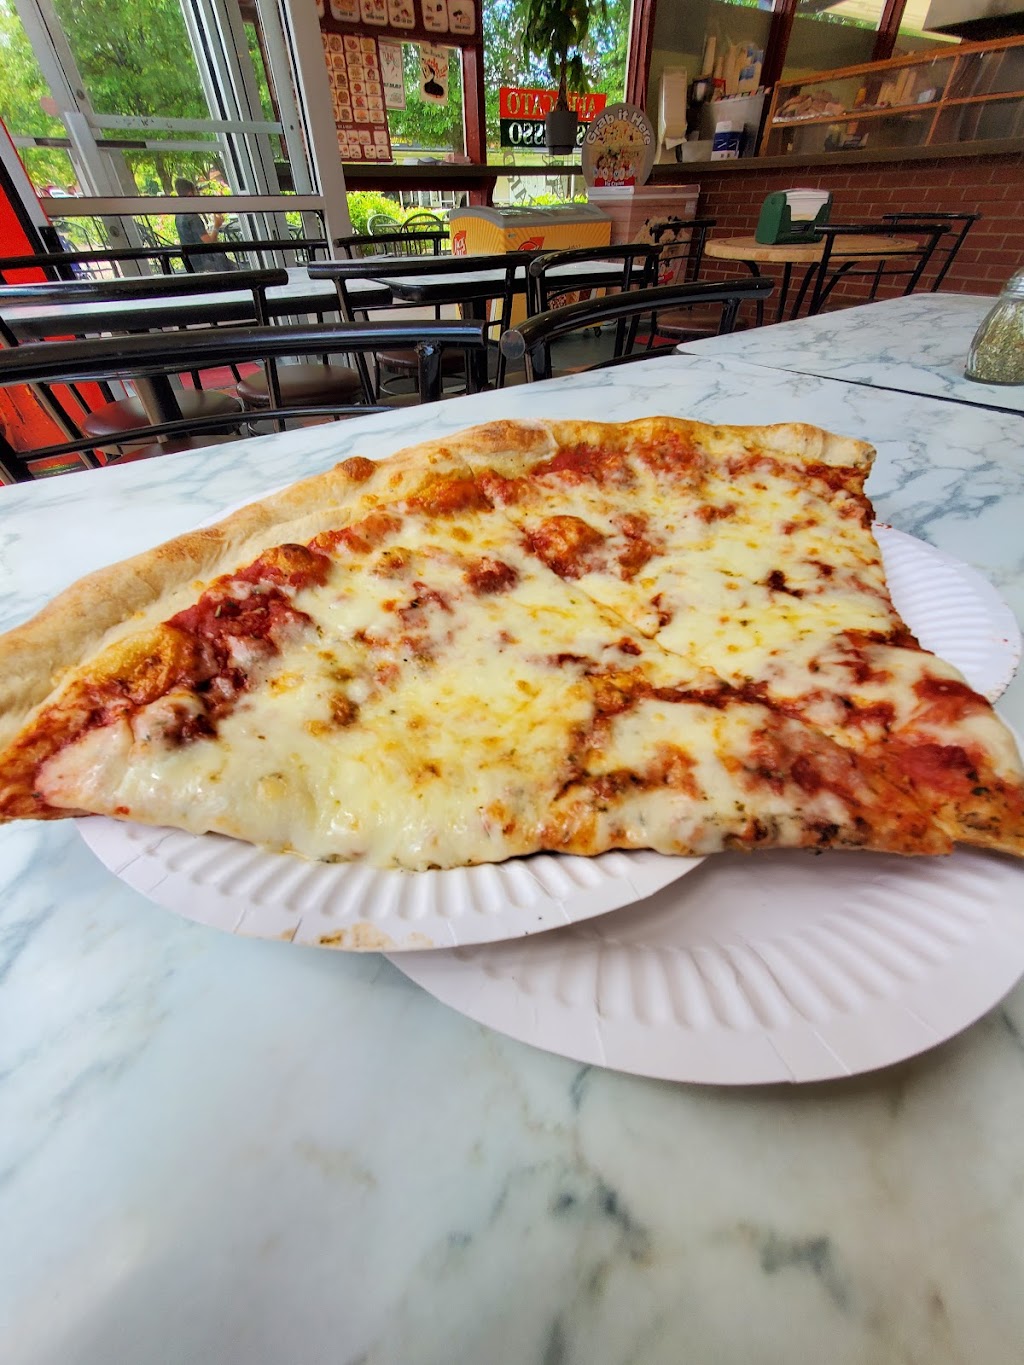 Ninos Pizza Star | 301 N Harrison St #19, Princeton, NJ 08540, USA | Phone: (609) 921-7422